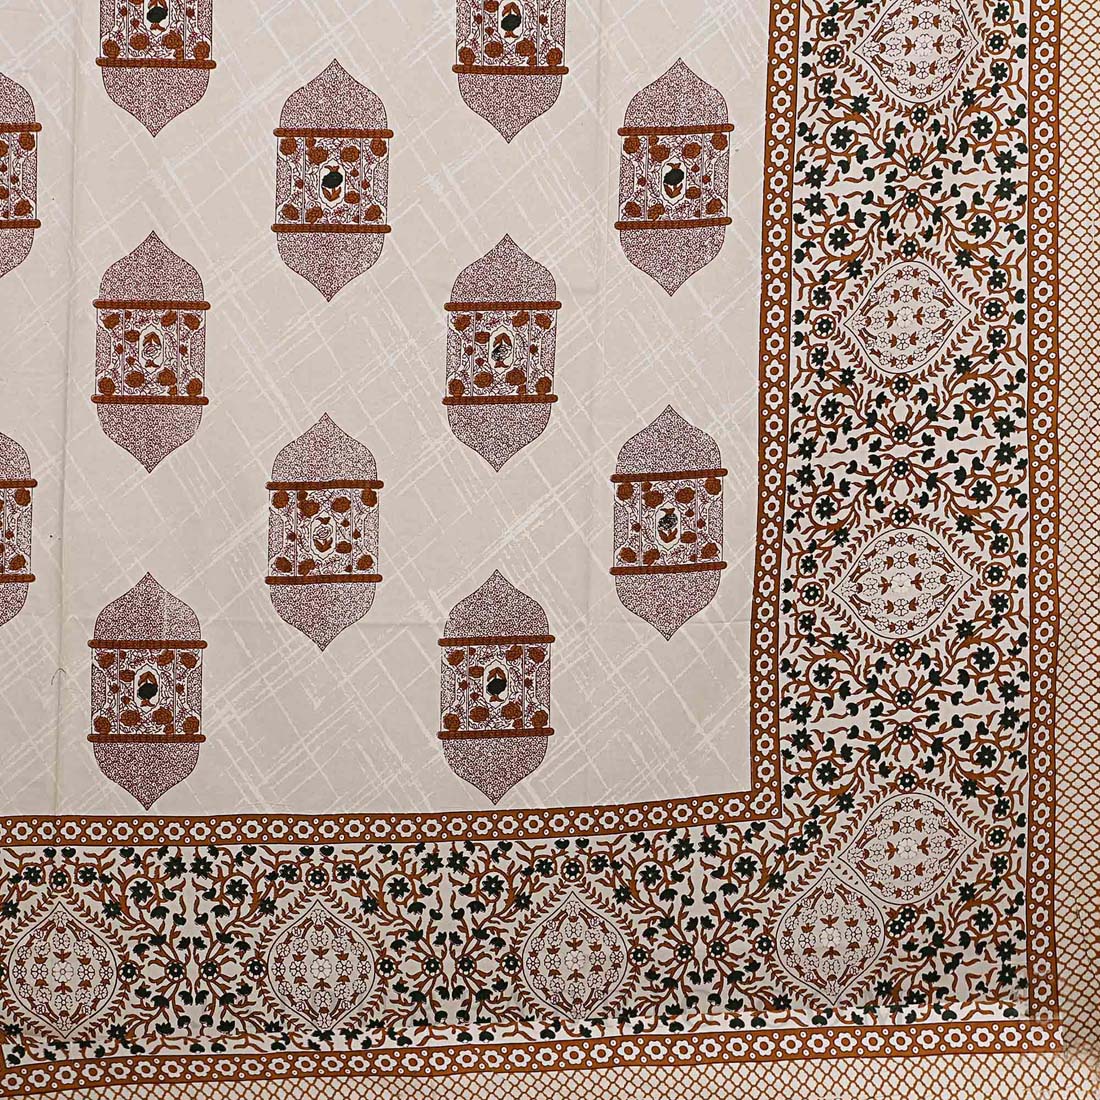 The Hawa Mahal Jharokha Brown Cotton Double Bedsheet